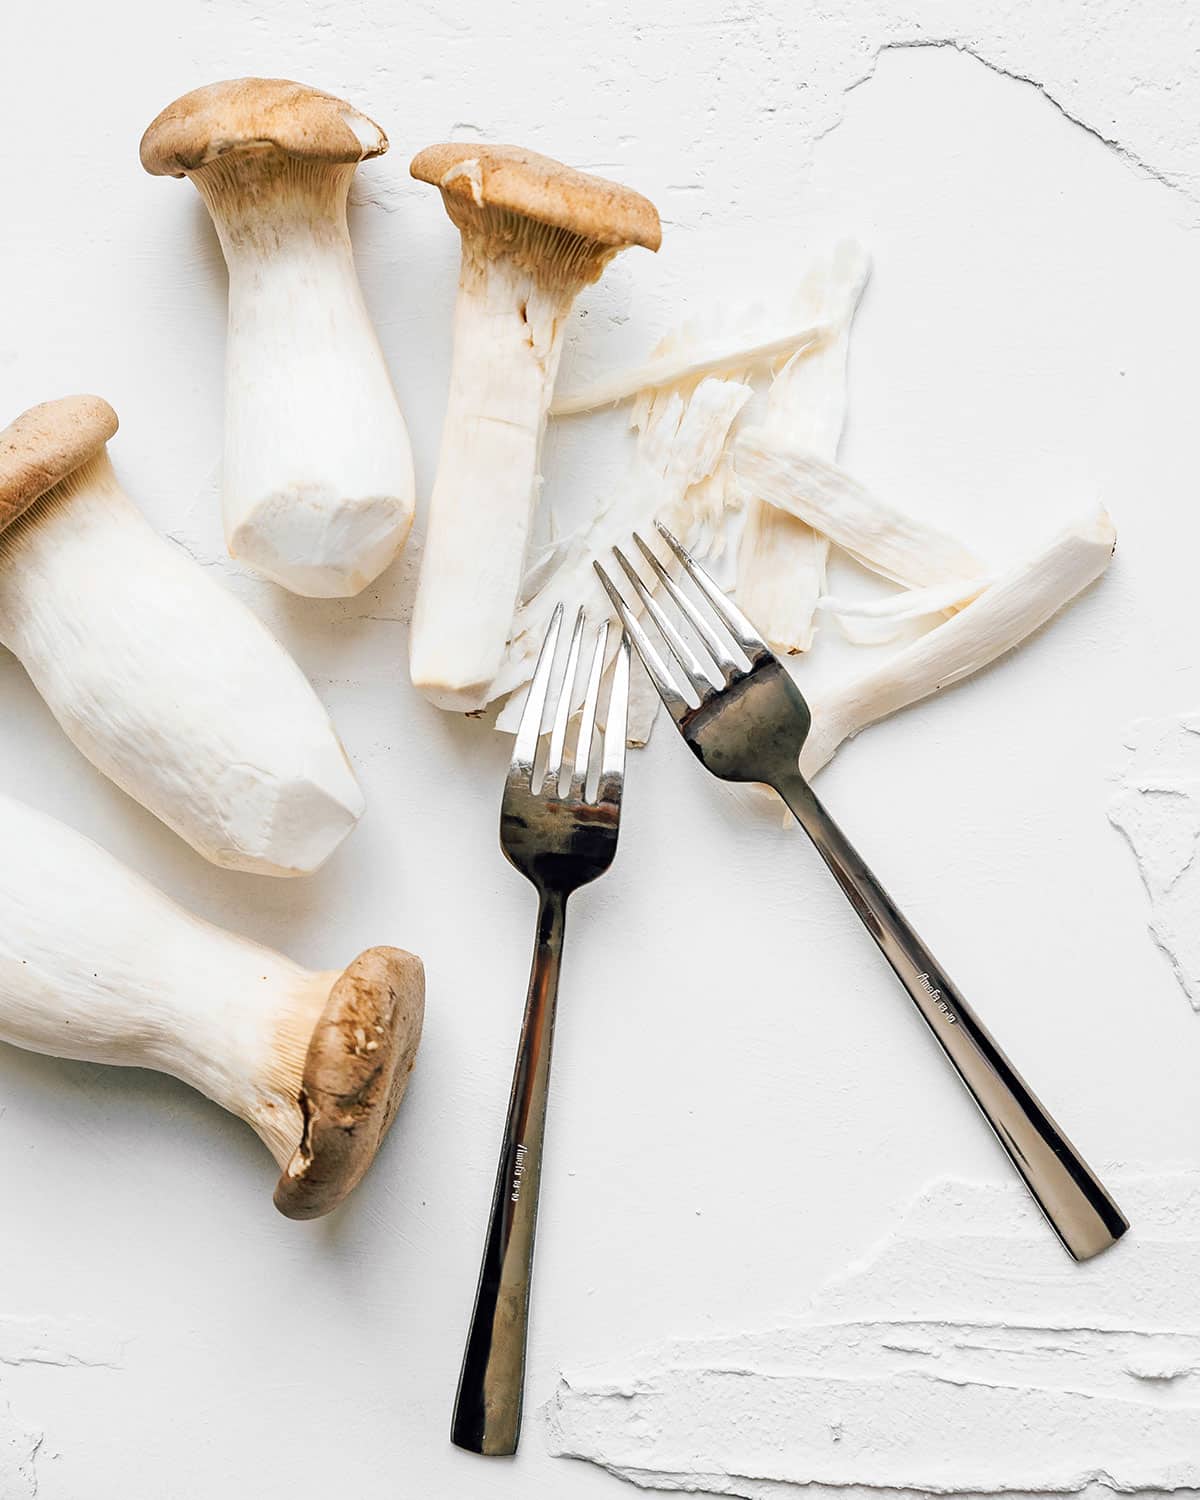 Shredding king oyster mushrooms with forks